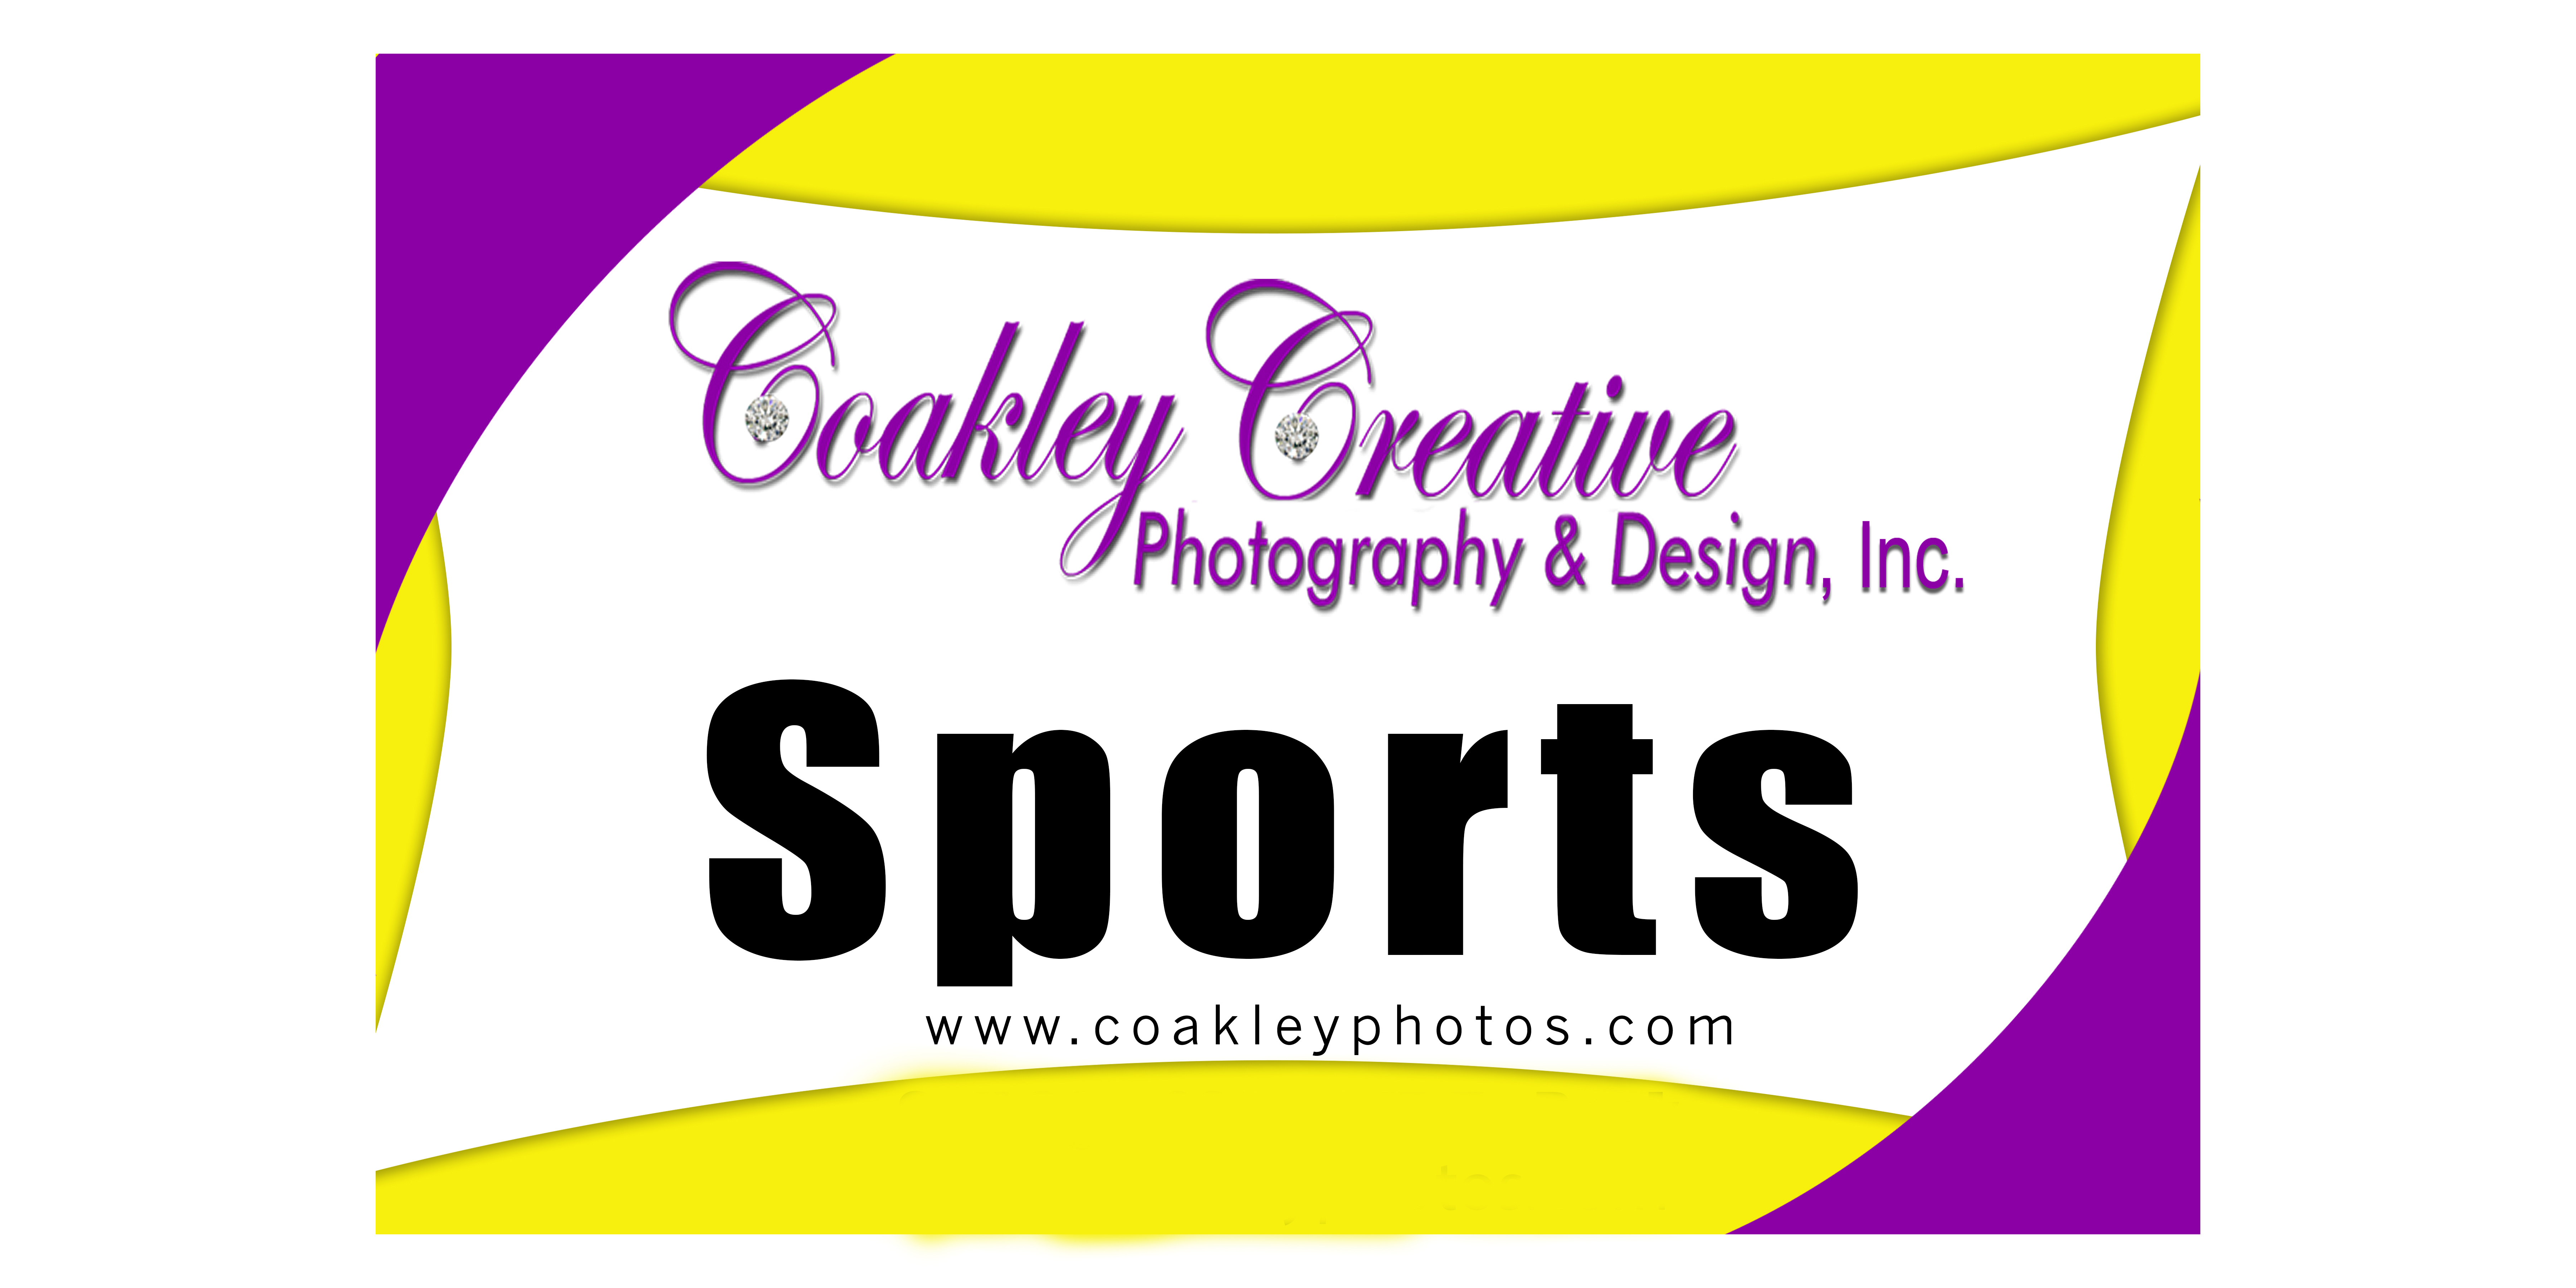 Coakley Creative Photography & Design Inc